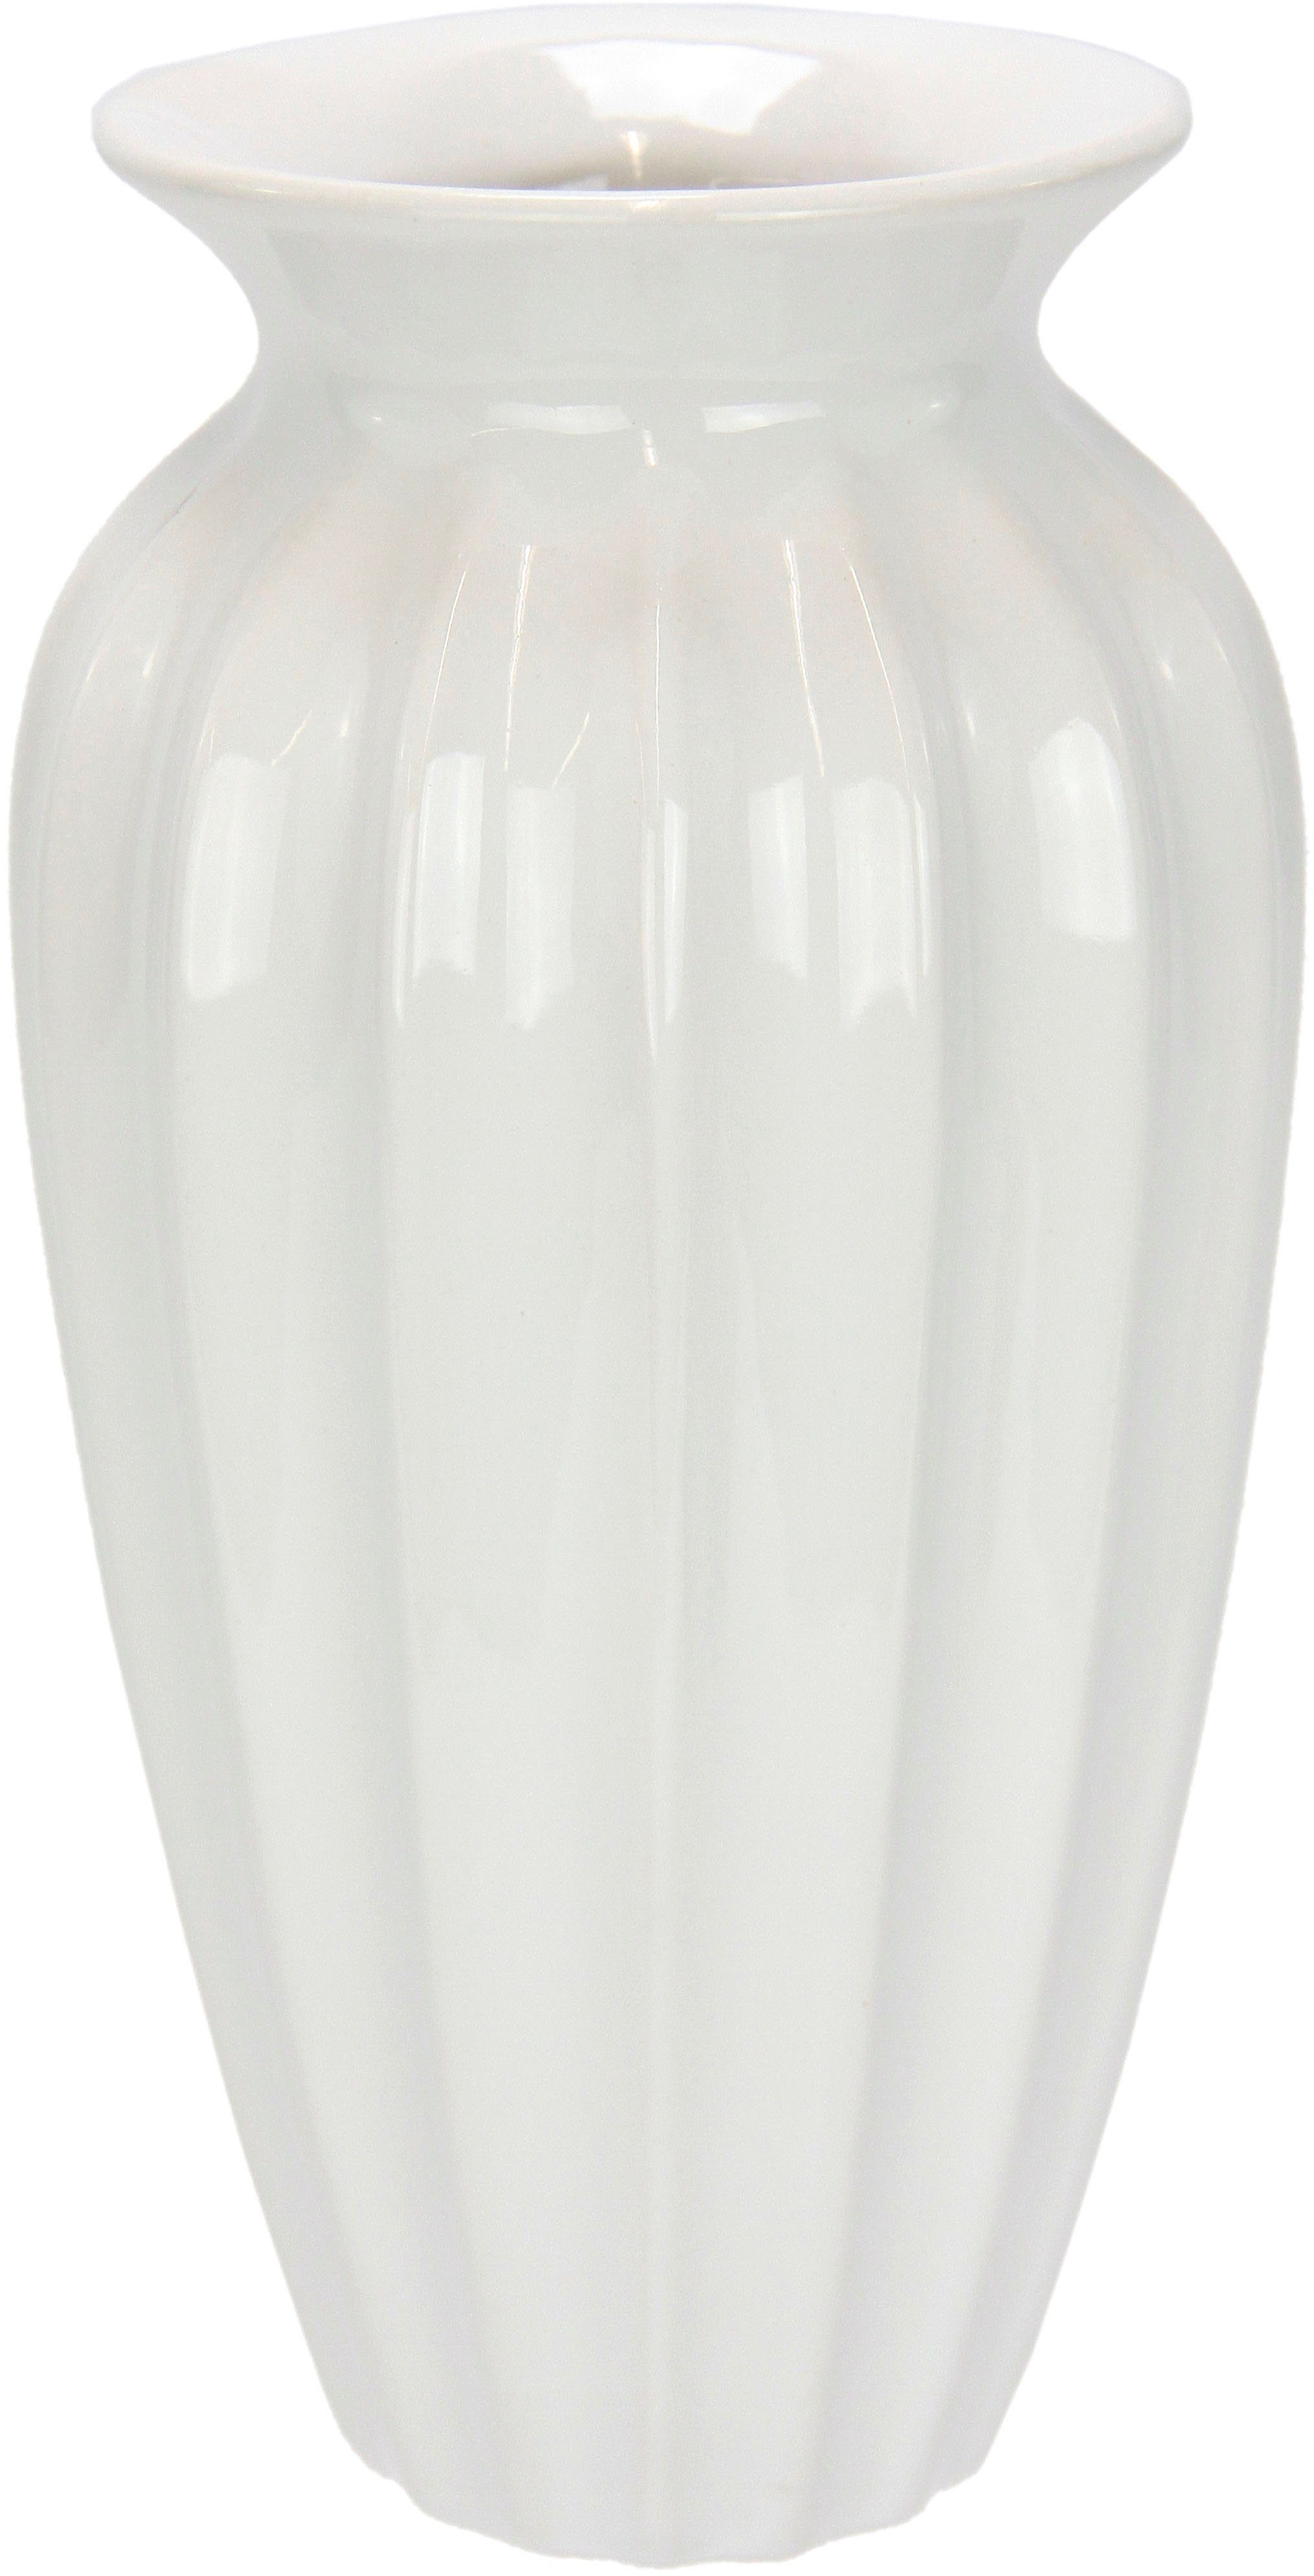 I.GE.A. Keramik, Keramik rund groß Dekovase Aus Vase,